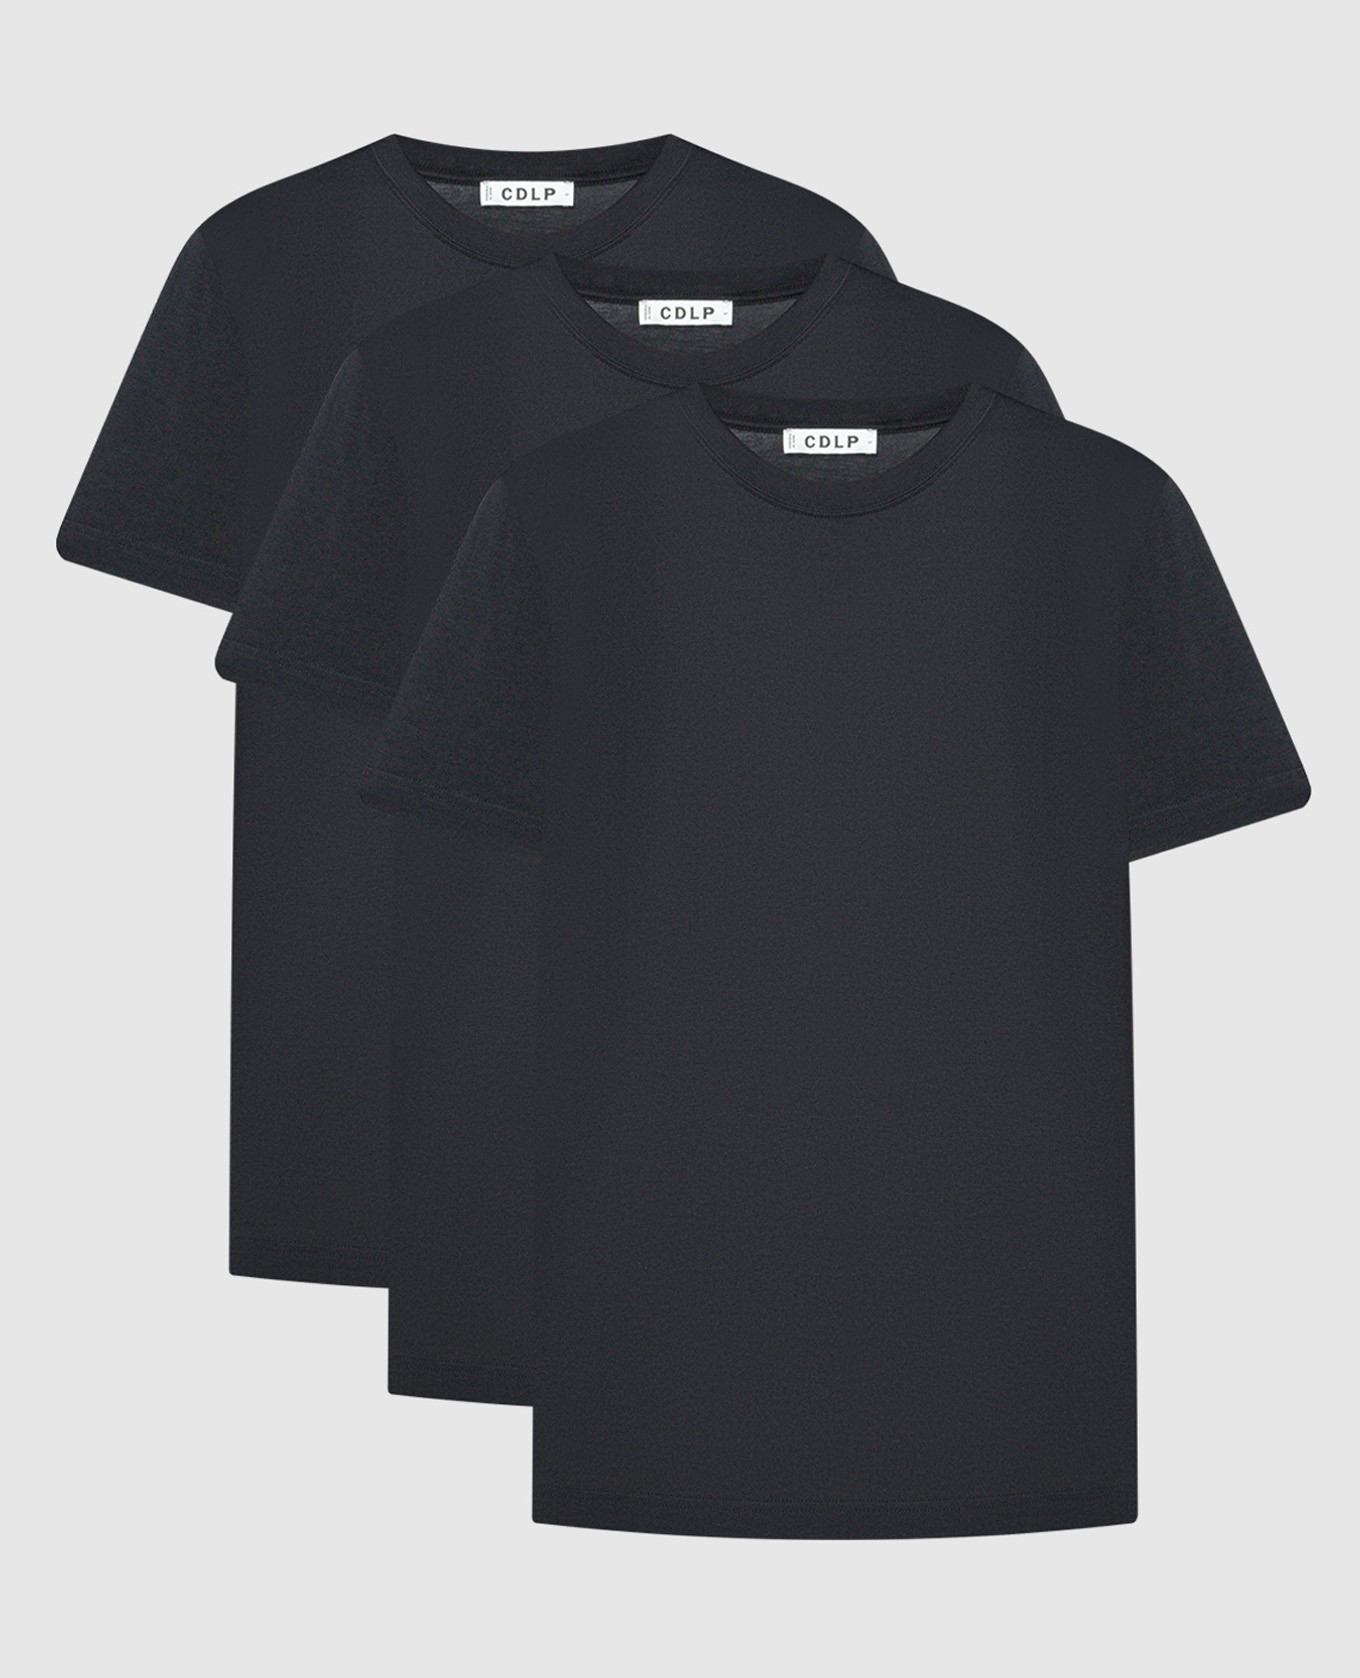 Set of black t-shirts